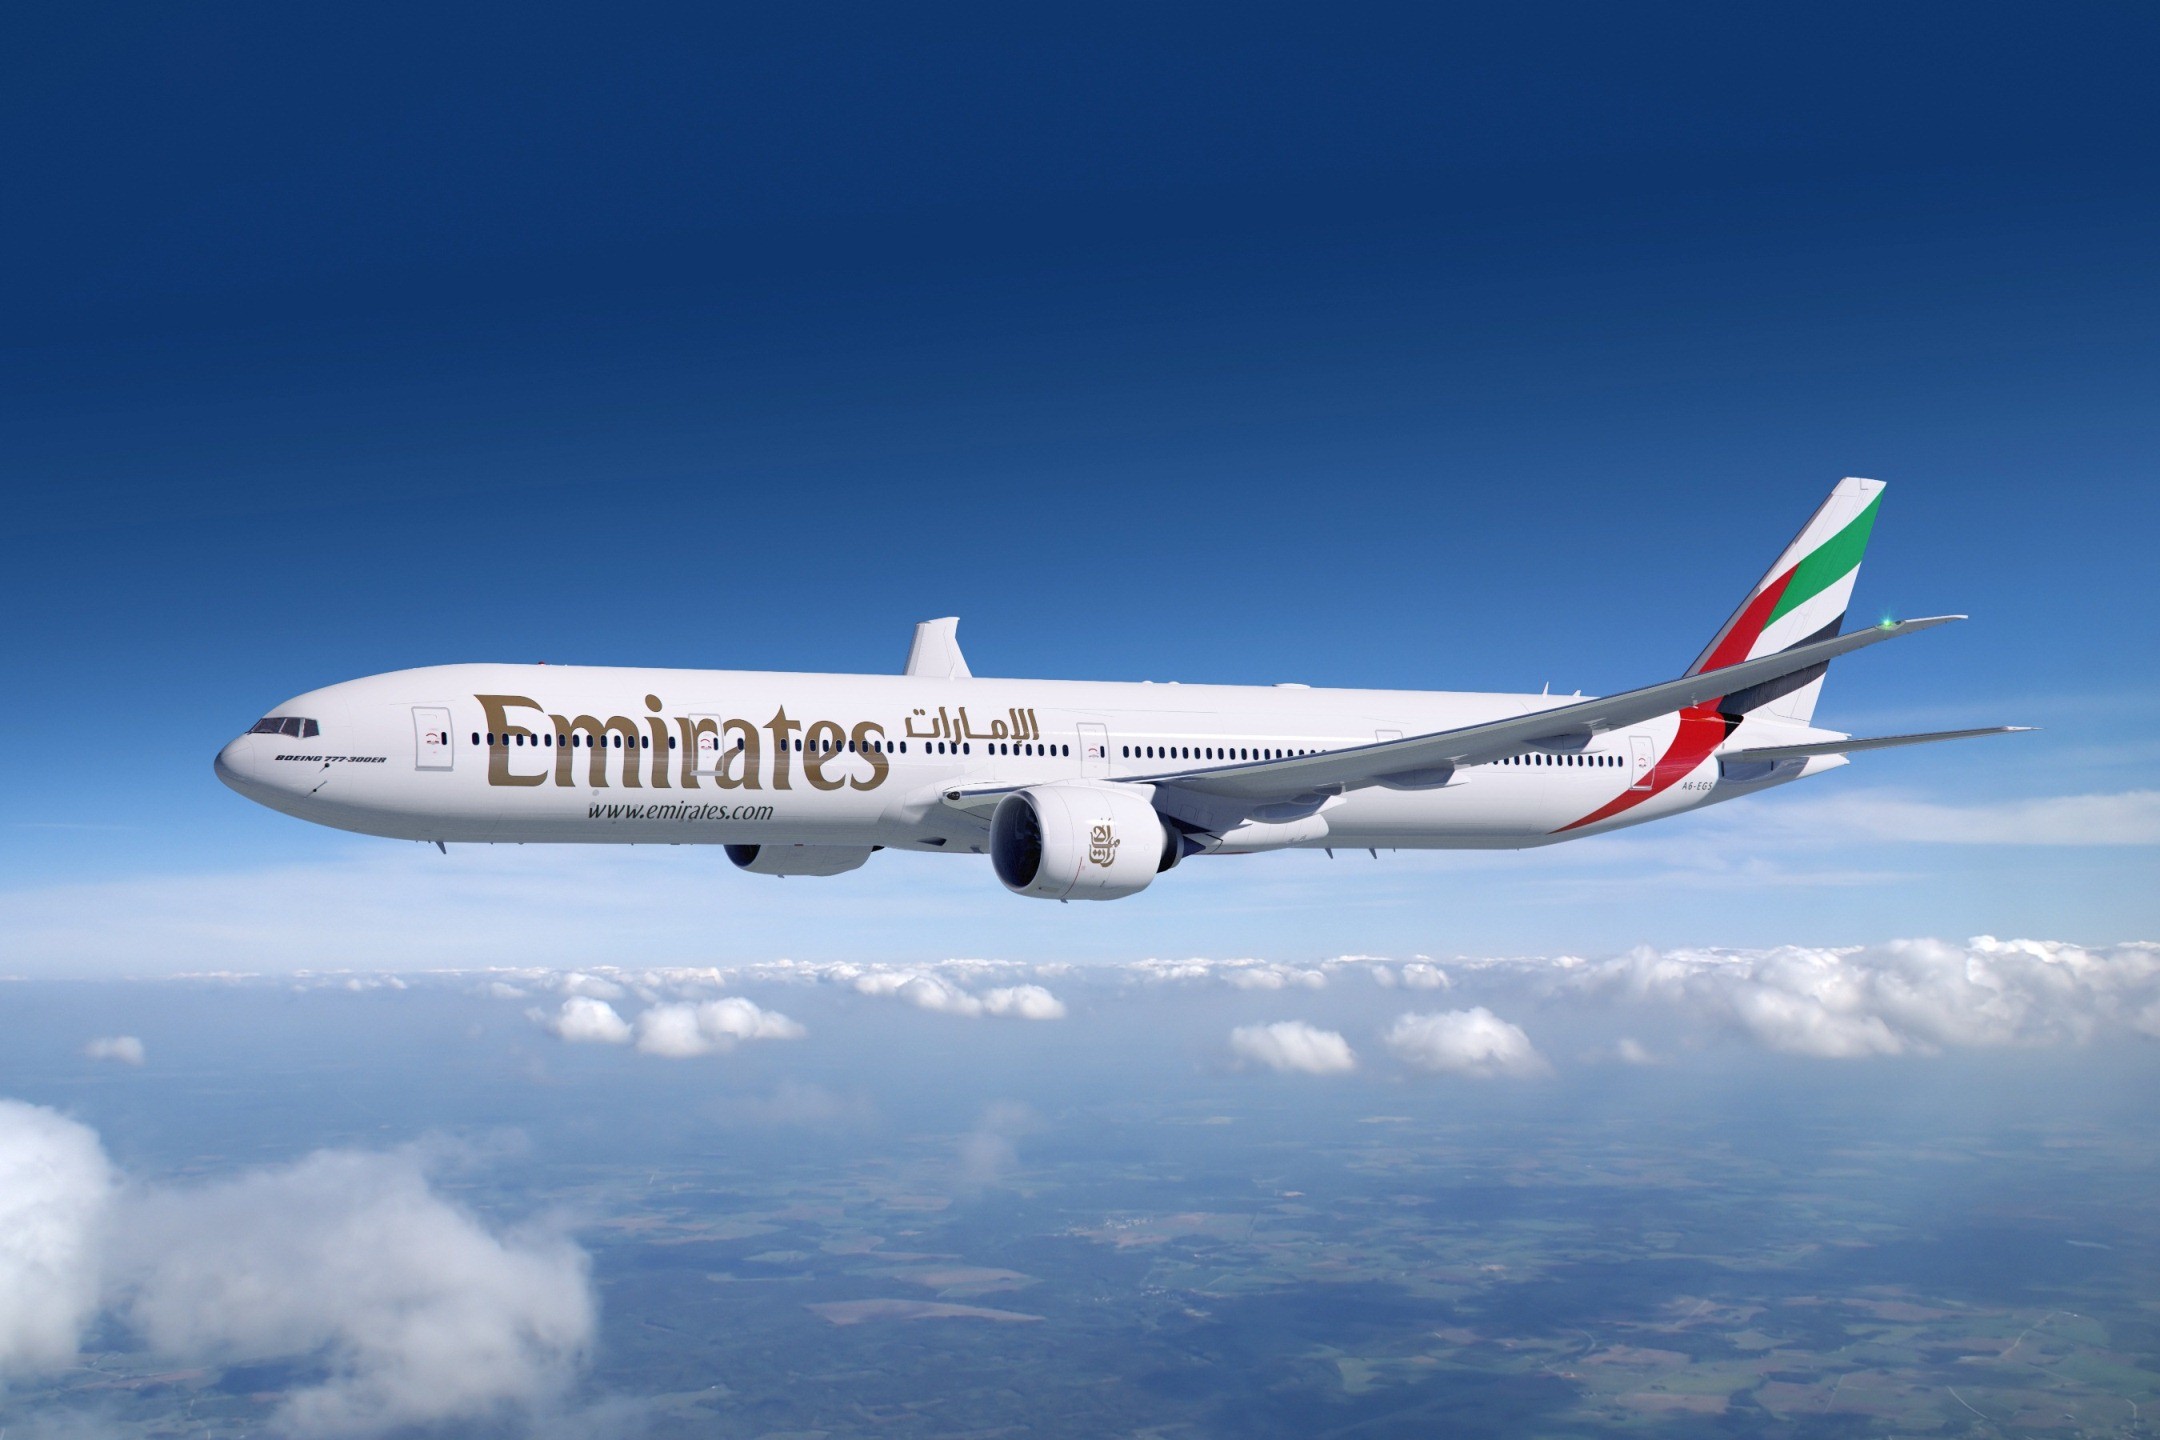 emirates wallpaper hd,linea aerea,aereo,aereo di linea,aviazione,aereo